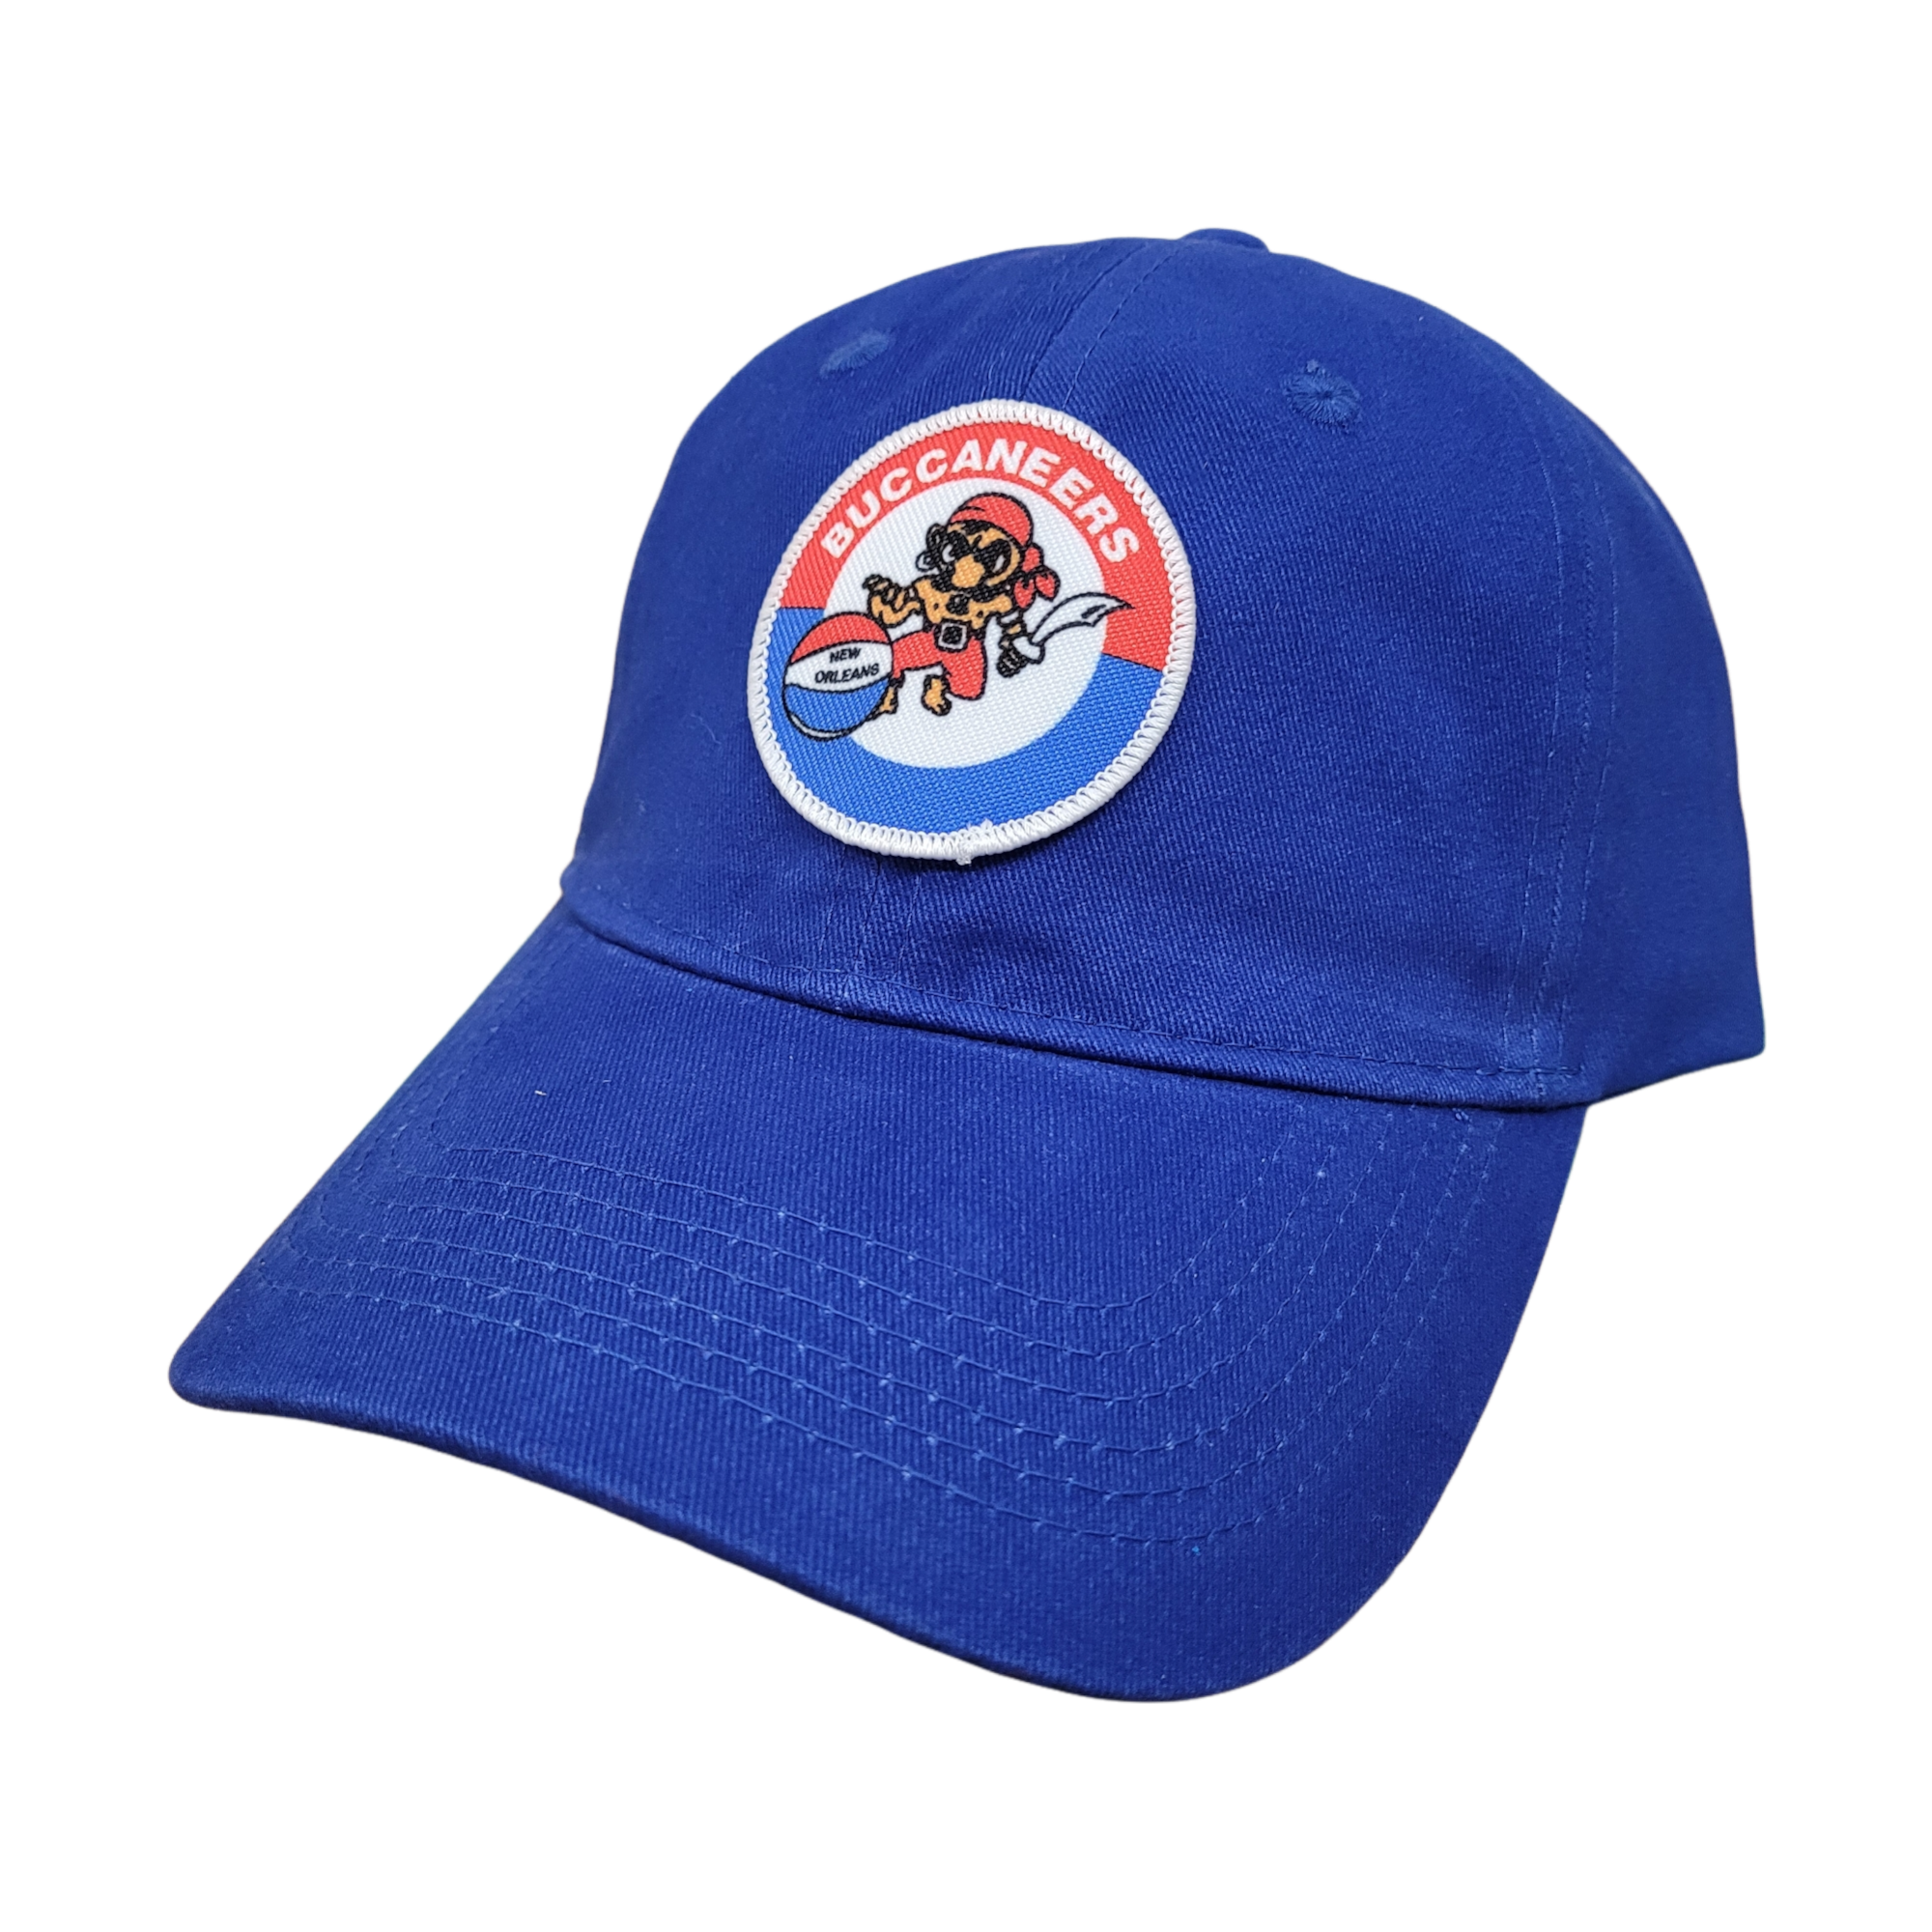 New Orleans Buccaneers ABA Hat